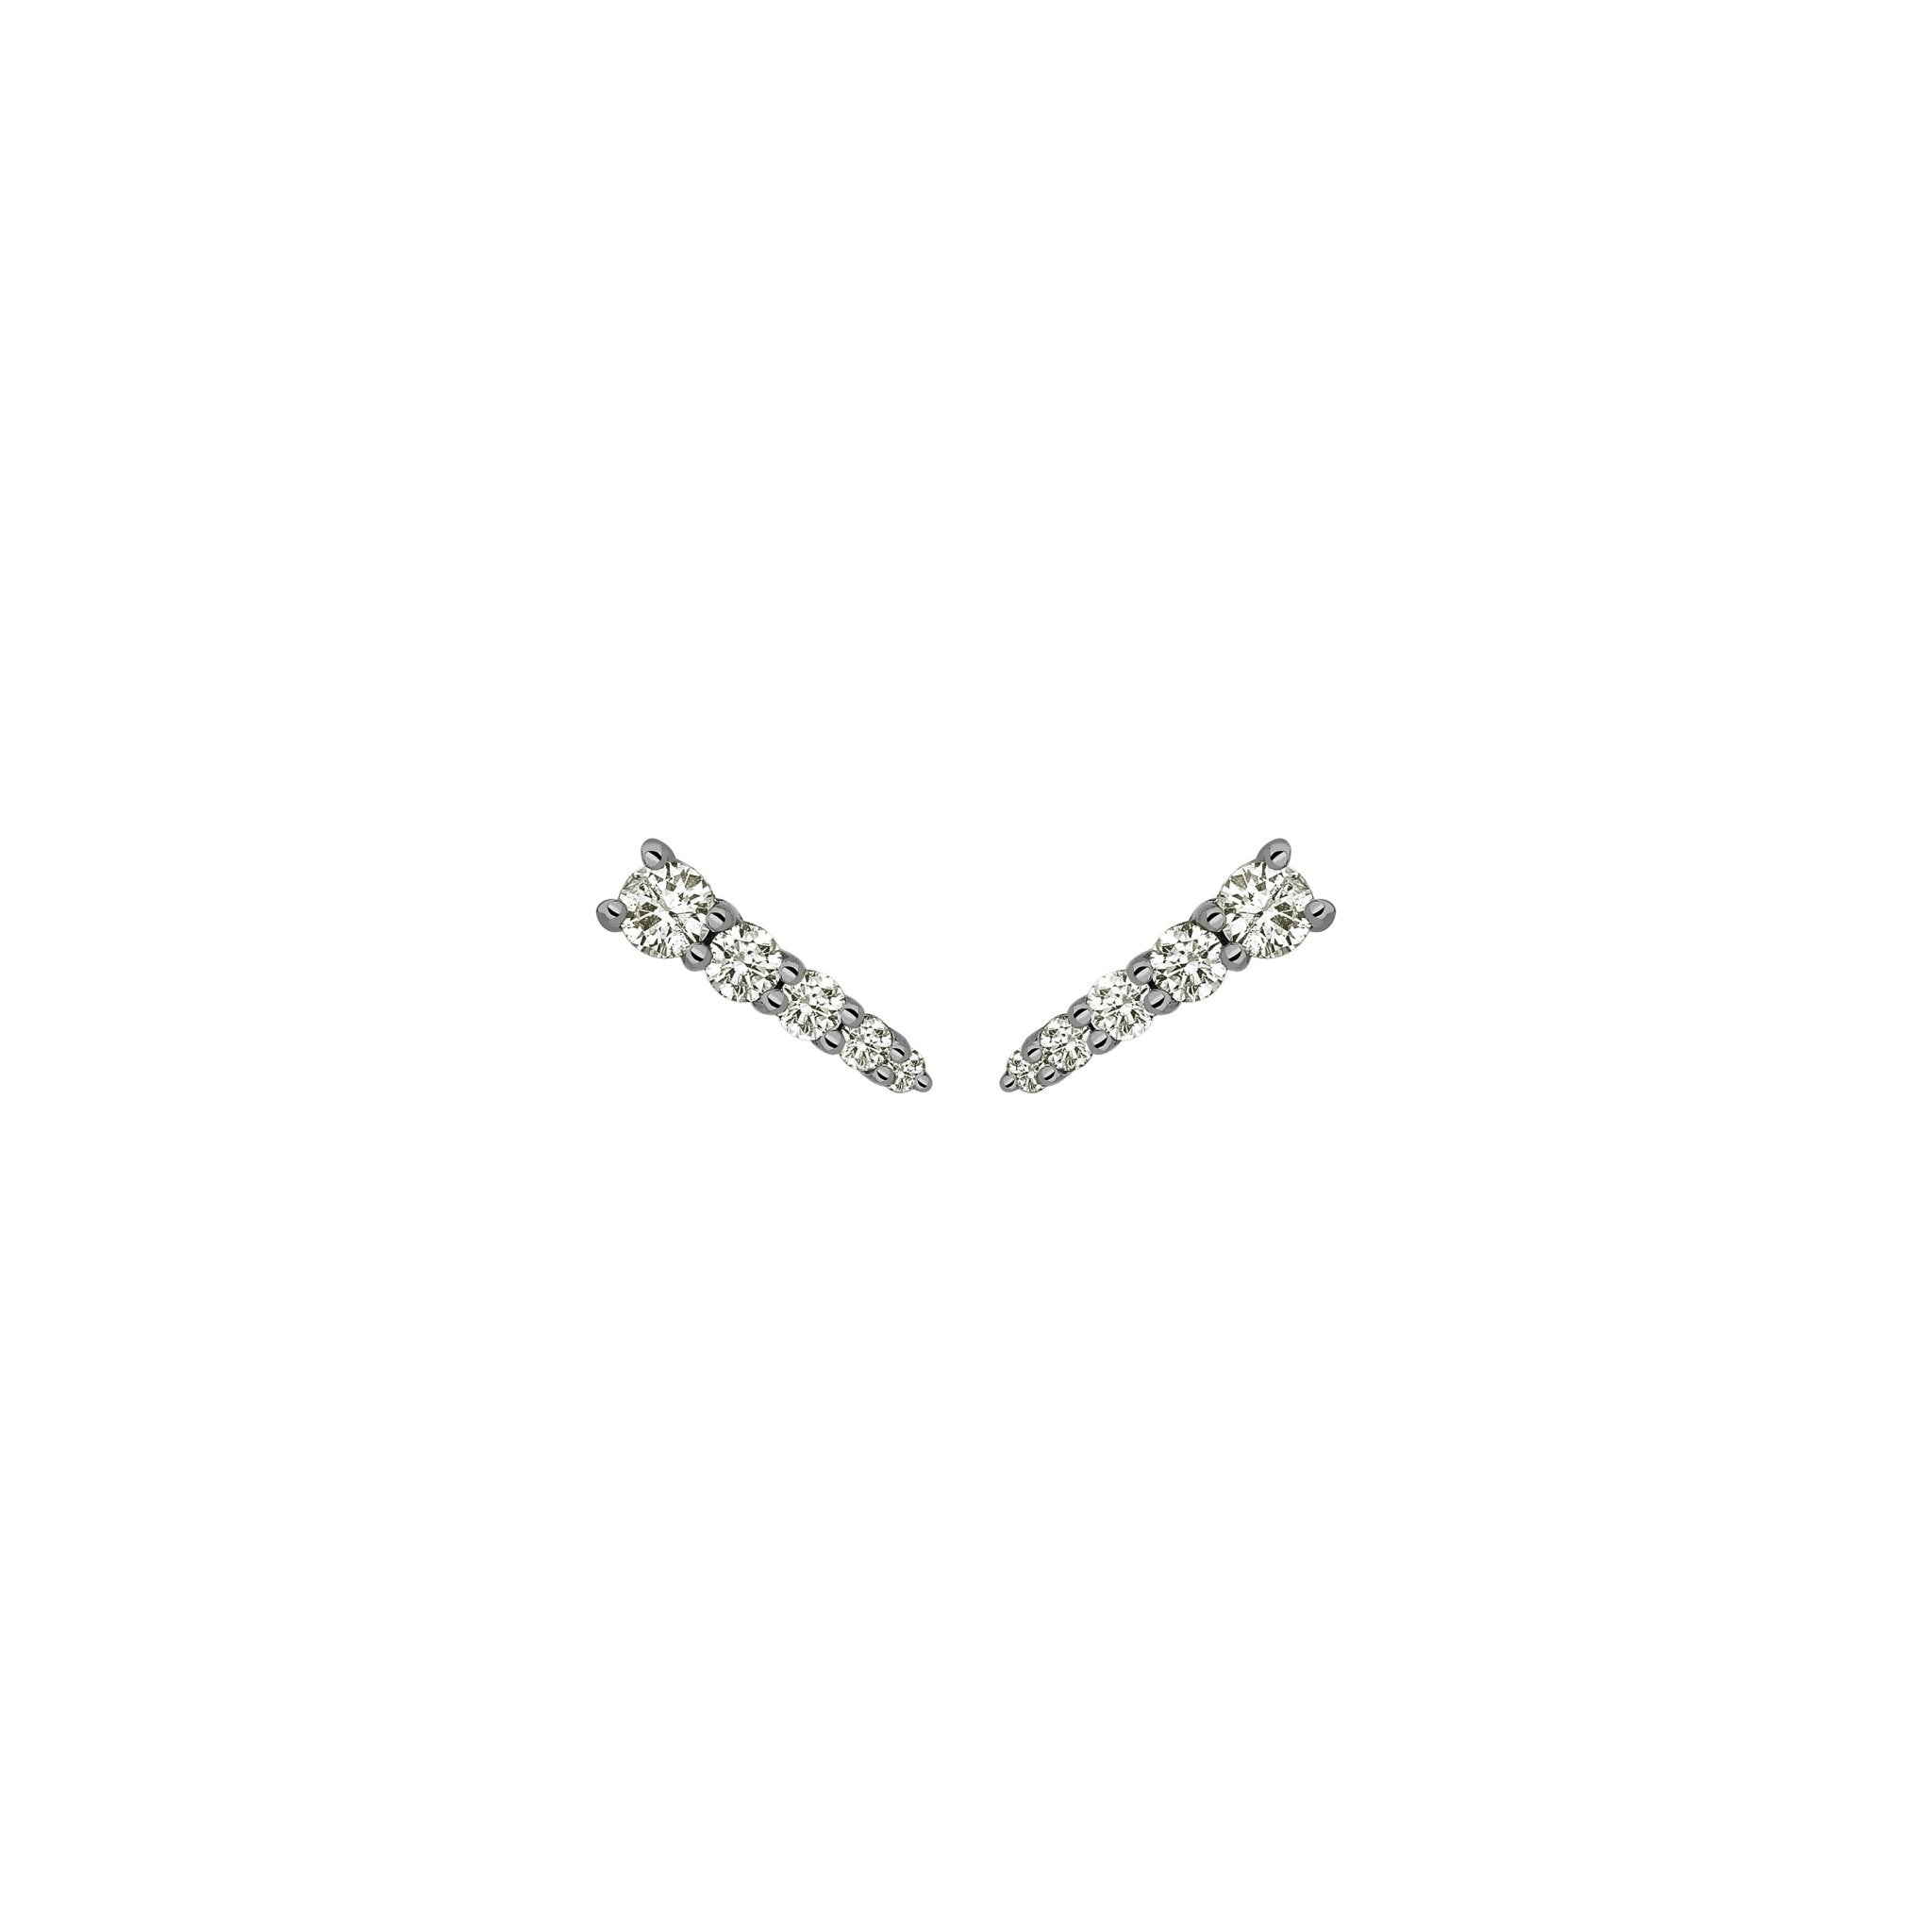 Brinco Ear Cuff Rock Star - P | Ouro Branco 18K com Ródio Negro e Diamantes - Jack Vartanian - Ear Cuffs